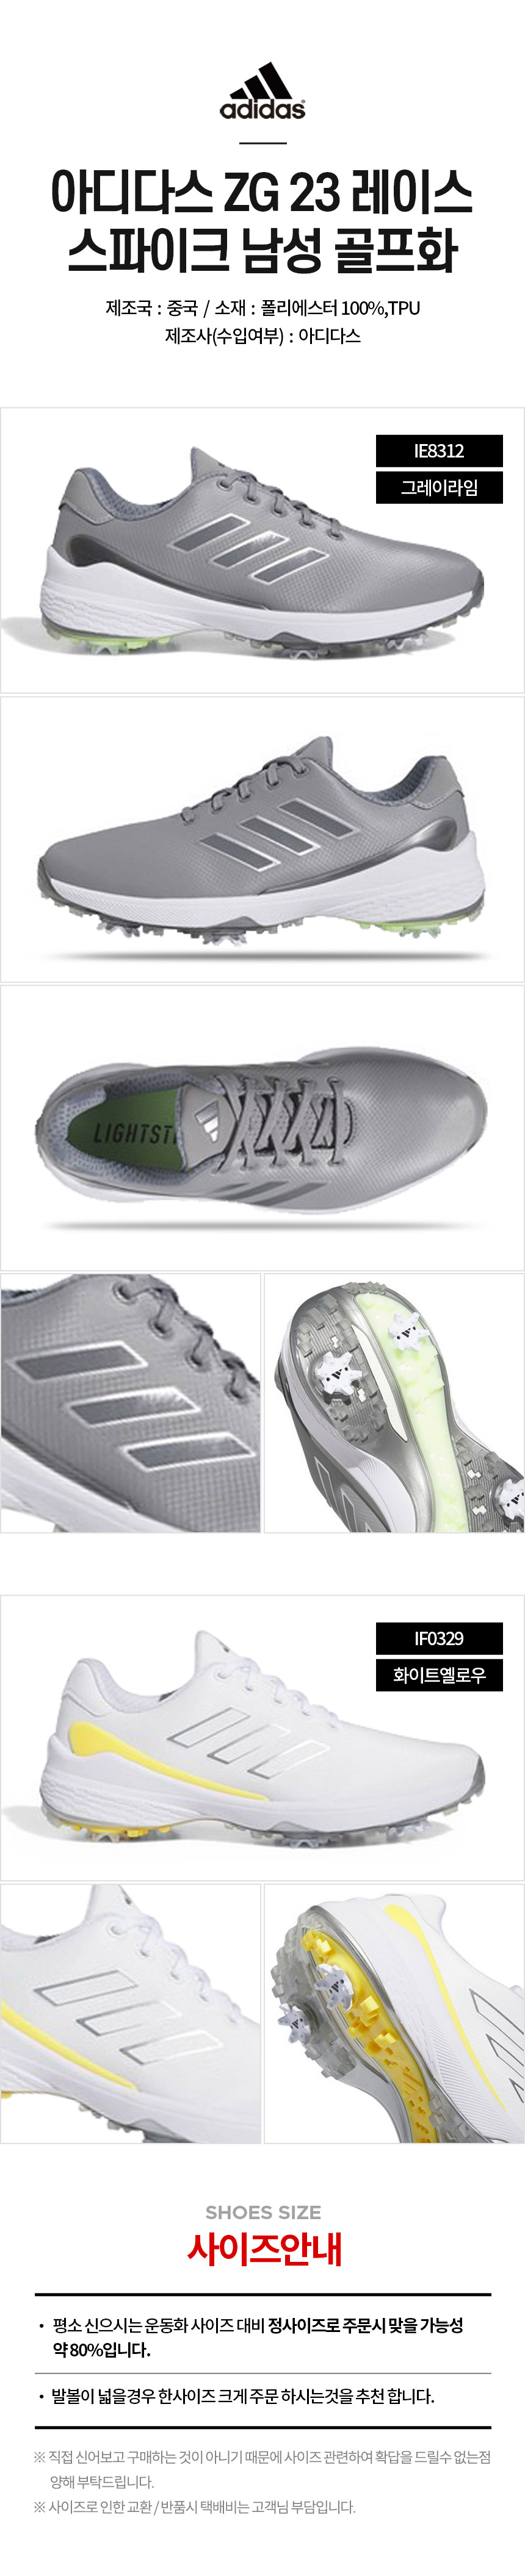 adidas_zg_23_lace_m_golf_shoes_24.jpg